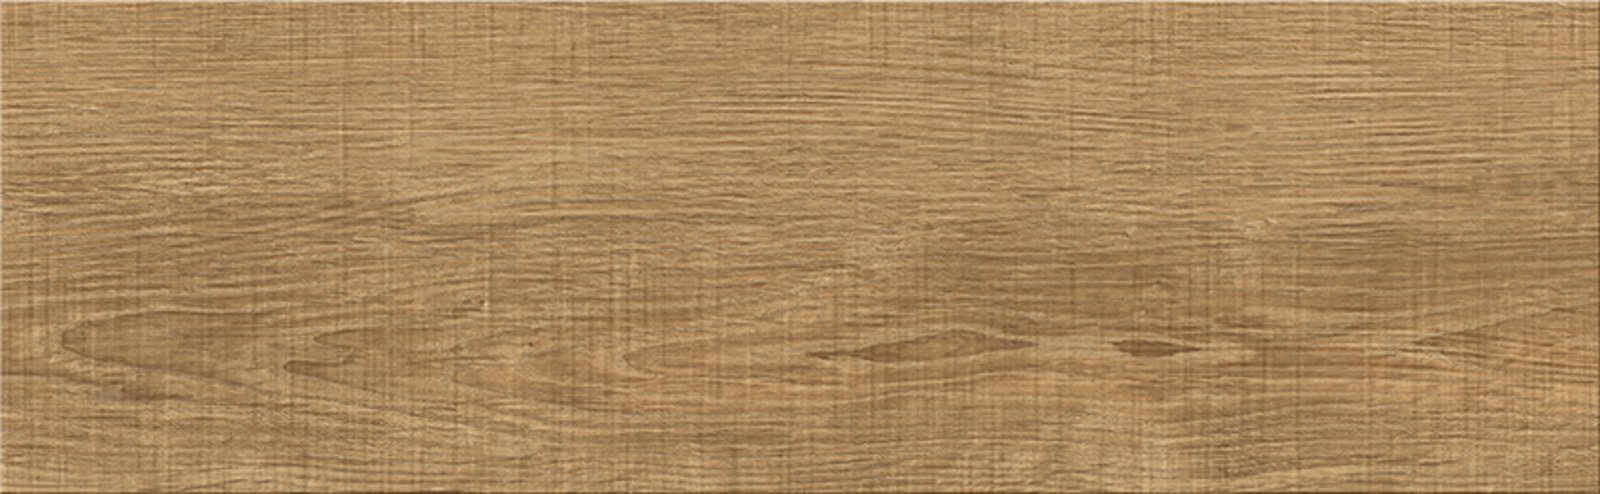 Dlažba War Wood Brown 18,5x59,8 cm